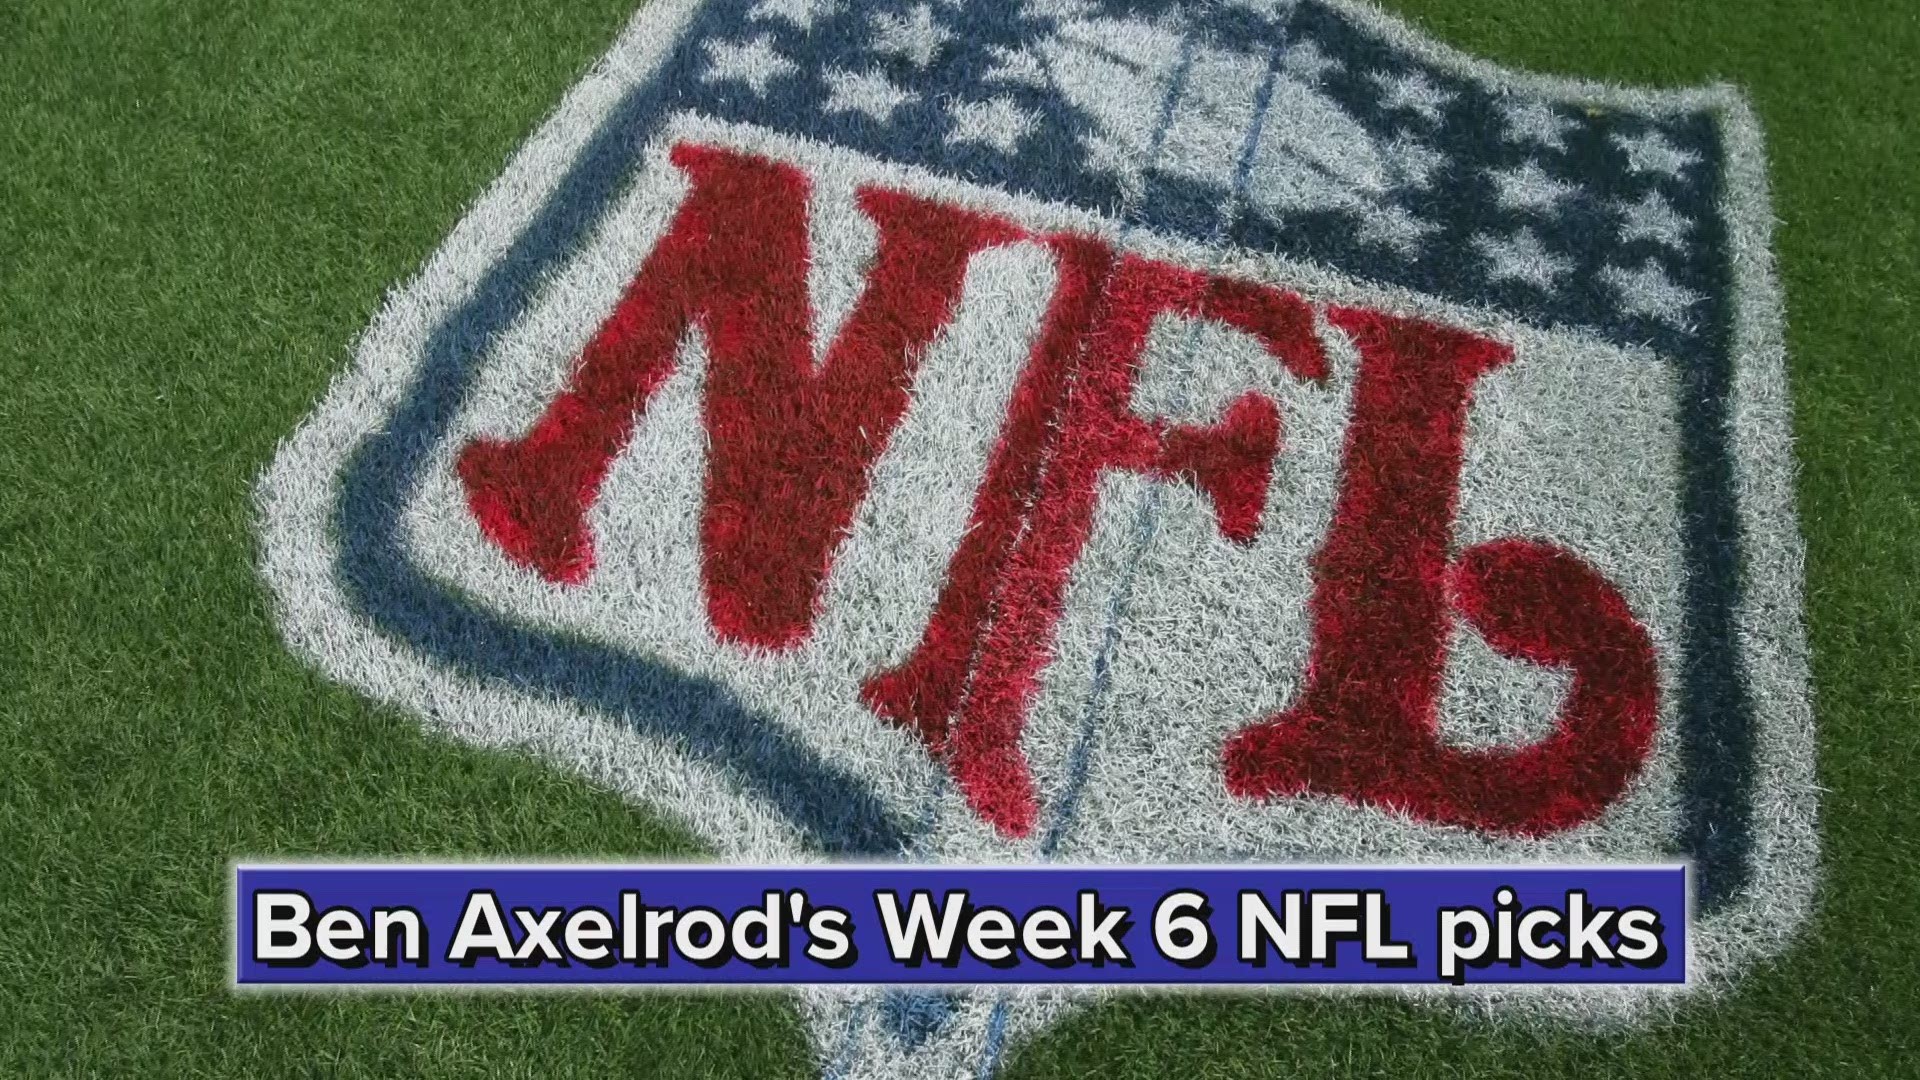 Ben Axelrod's Week 6 NFL picks: Eagles beat Giants, Browns upset Chargers